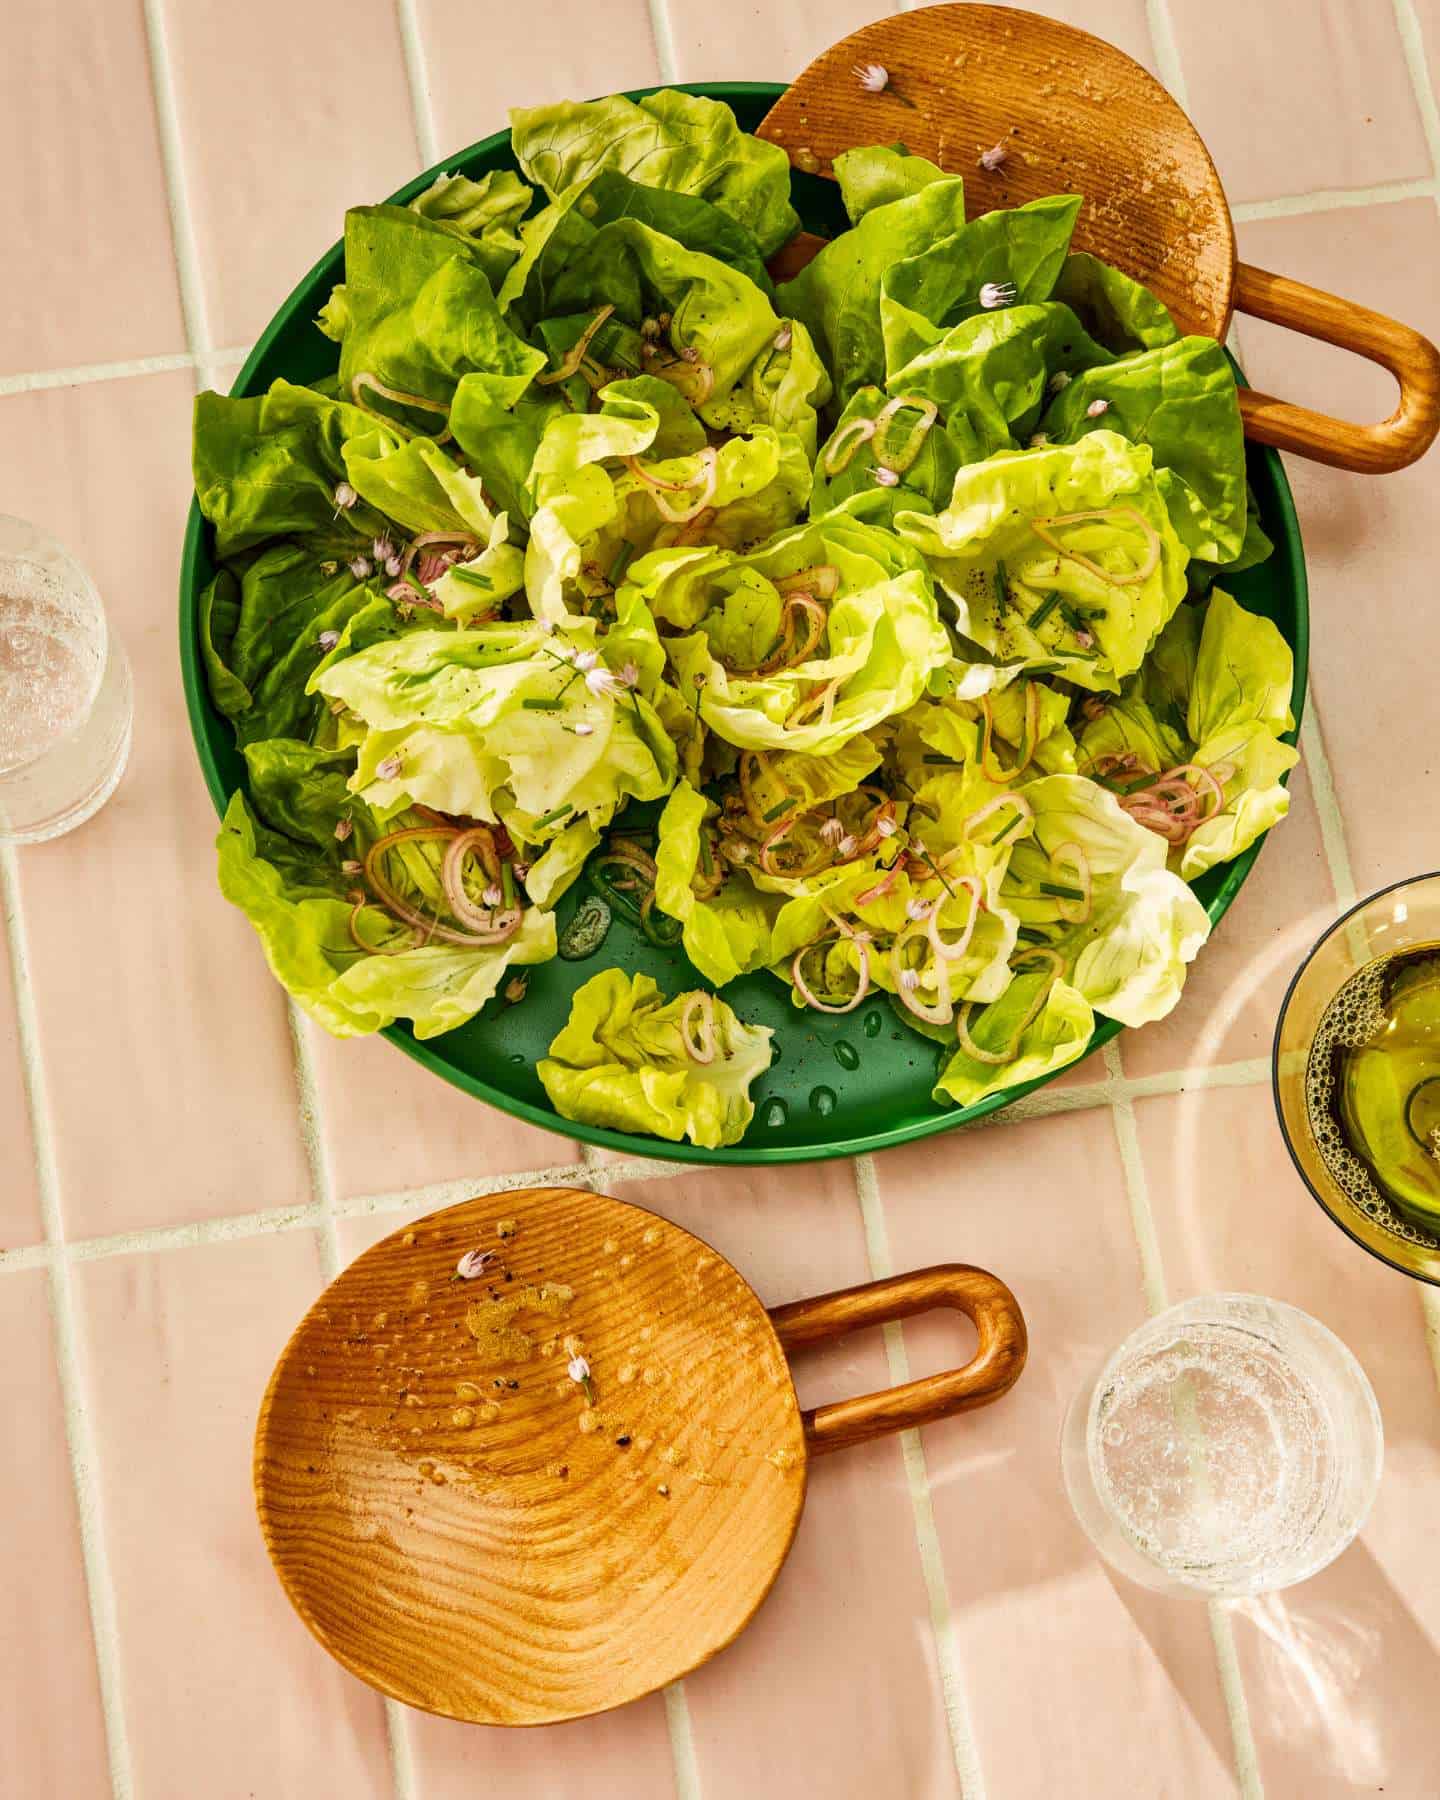 Living Lettuce Salad with Dijon Vinaigrette recipe by Casa de Suna